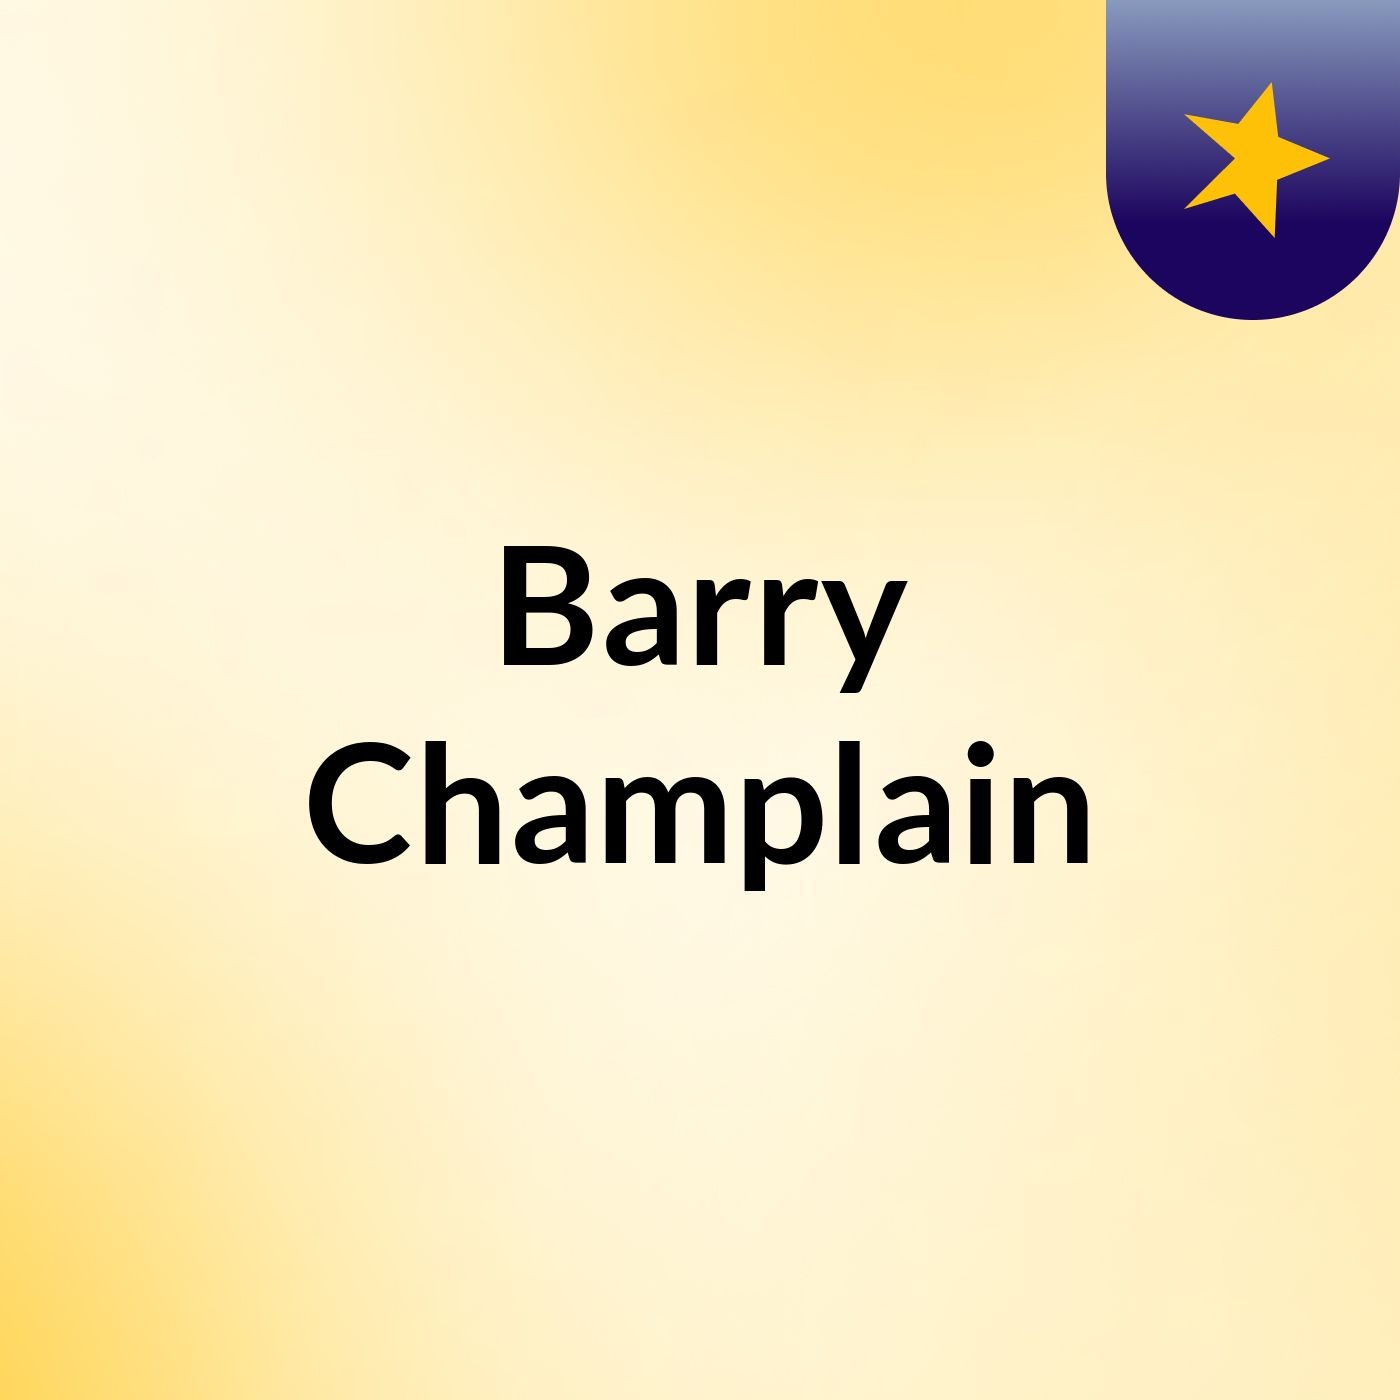 Barry Champlain